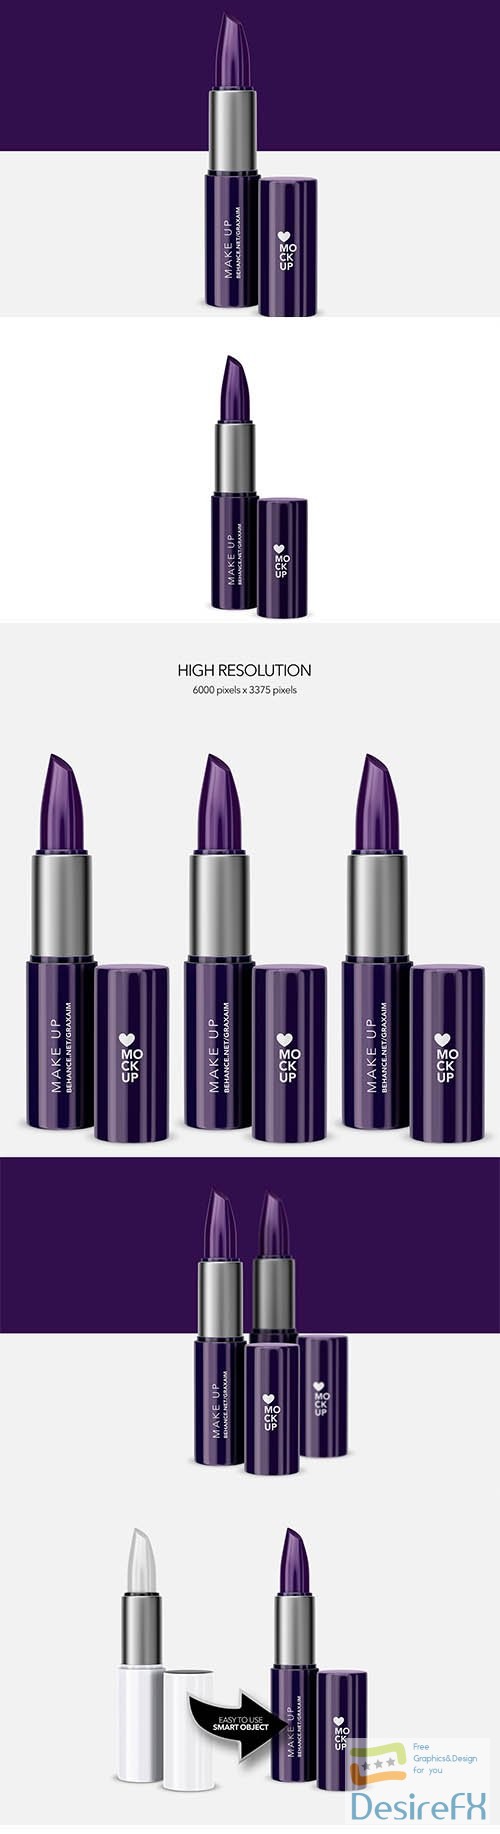 Cosmetics Lipstick Mockup - Make up 3702561